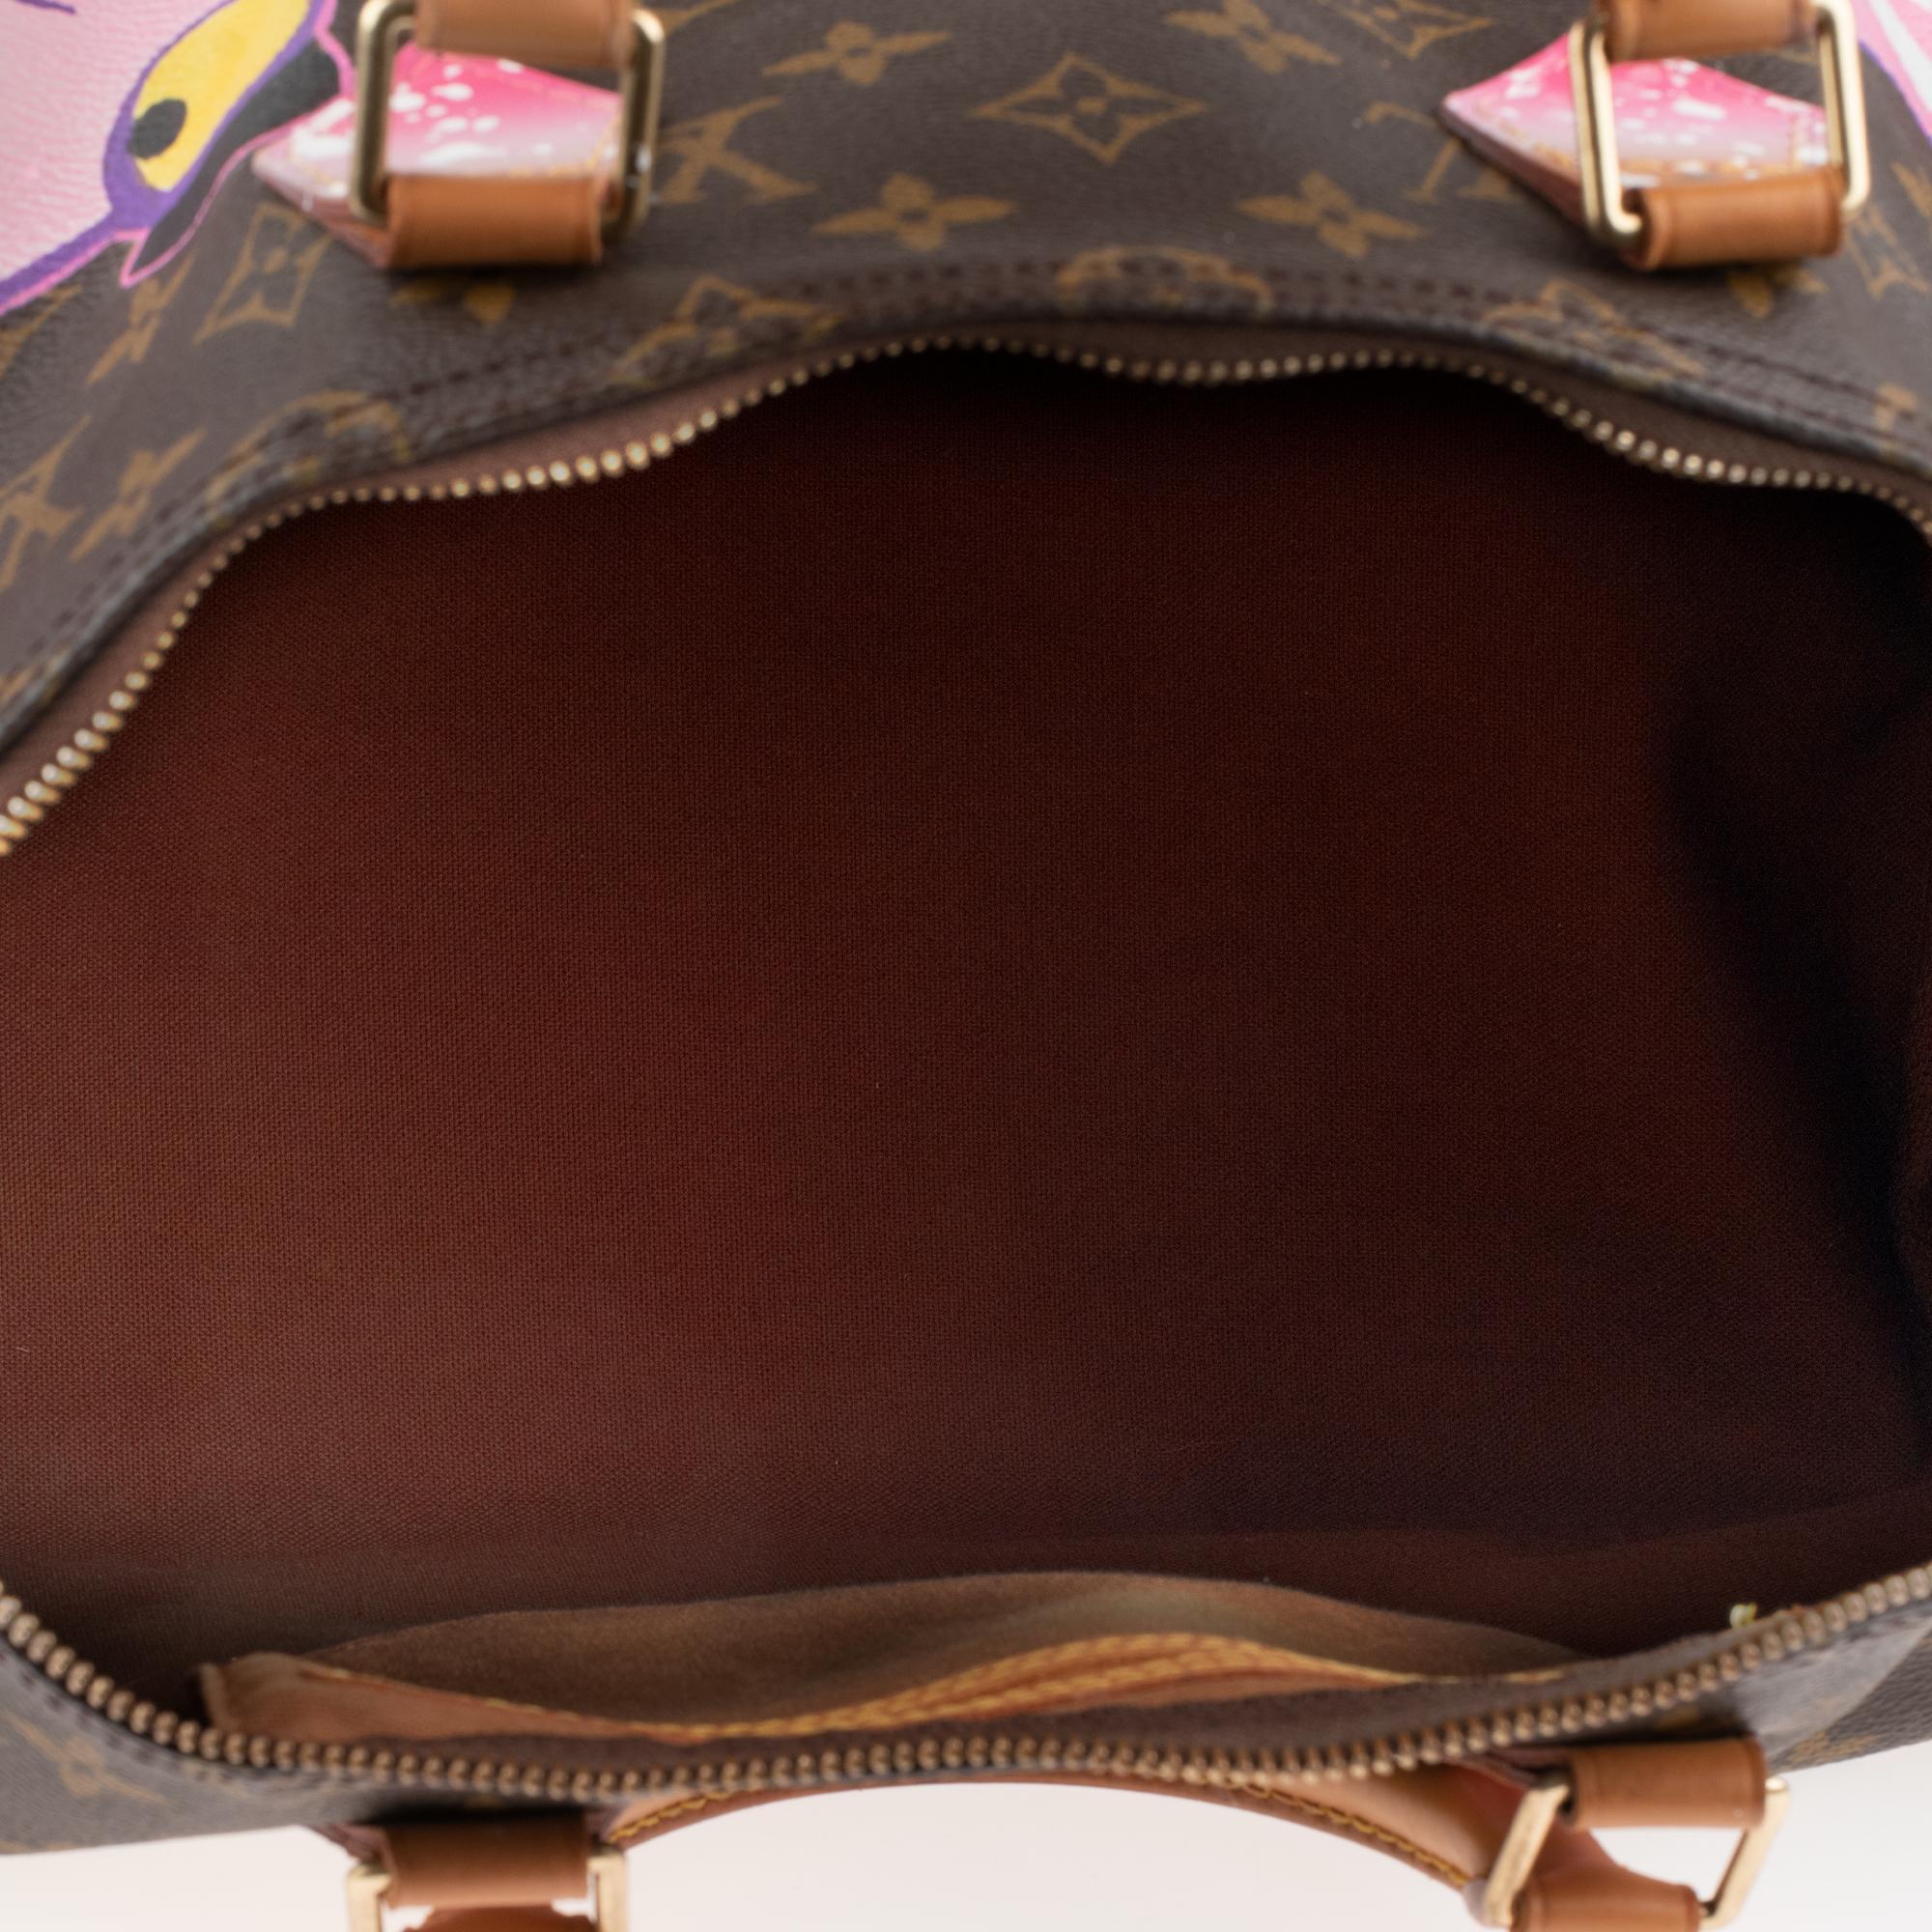 Handbag Louis Vuitton Speedy 35 Monogram customized 